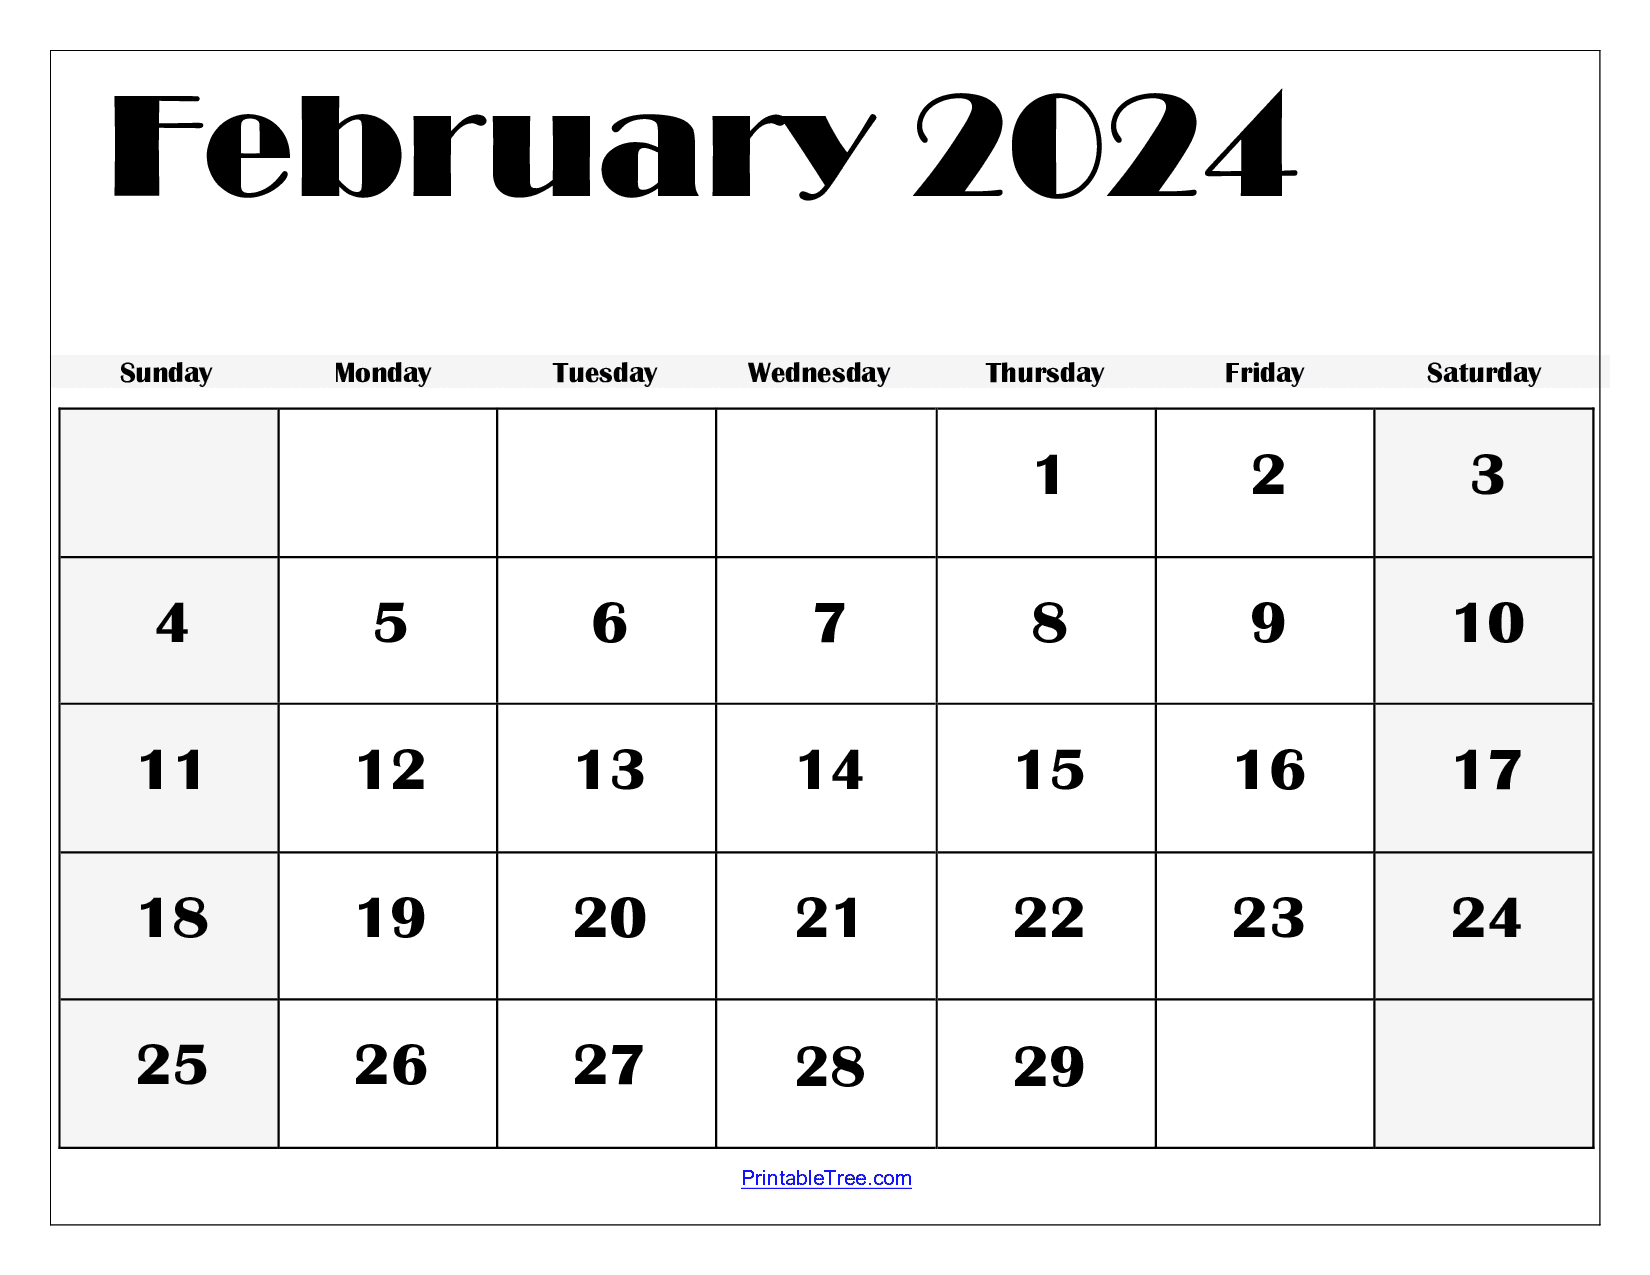 February 2024 Calendar Printable Pdf Template With Holidays for Printable February Calendar 2024 Free